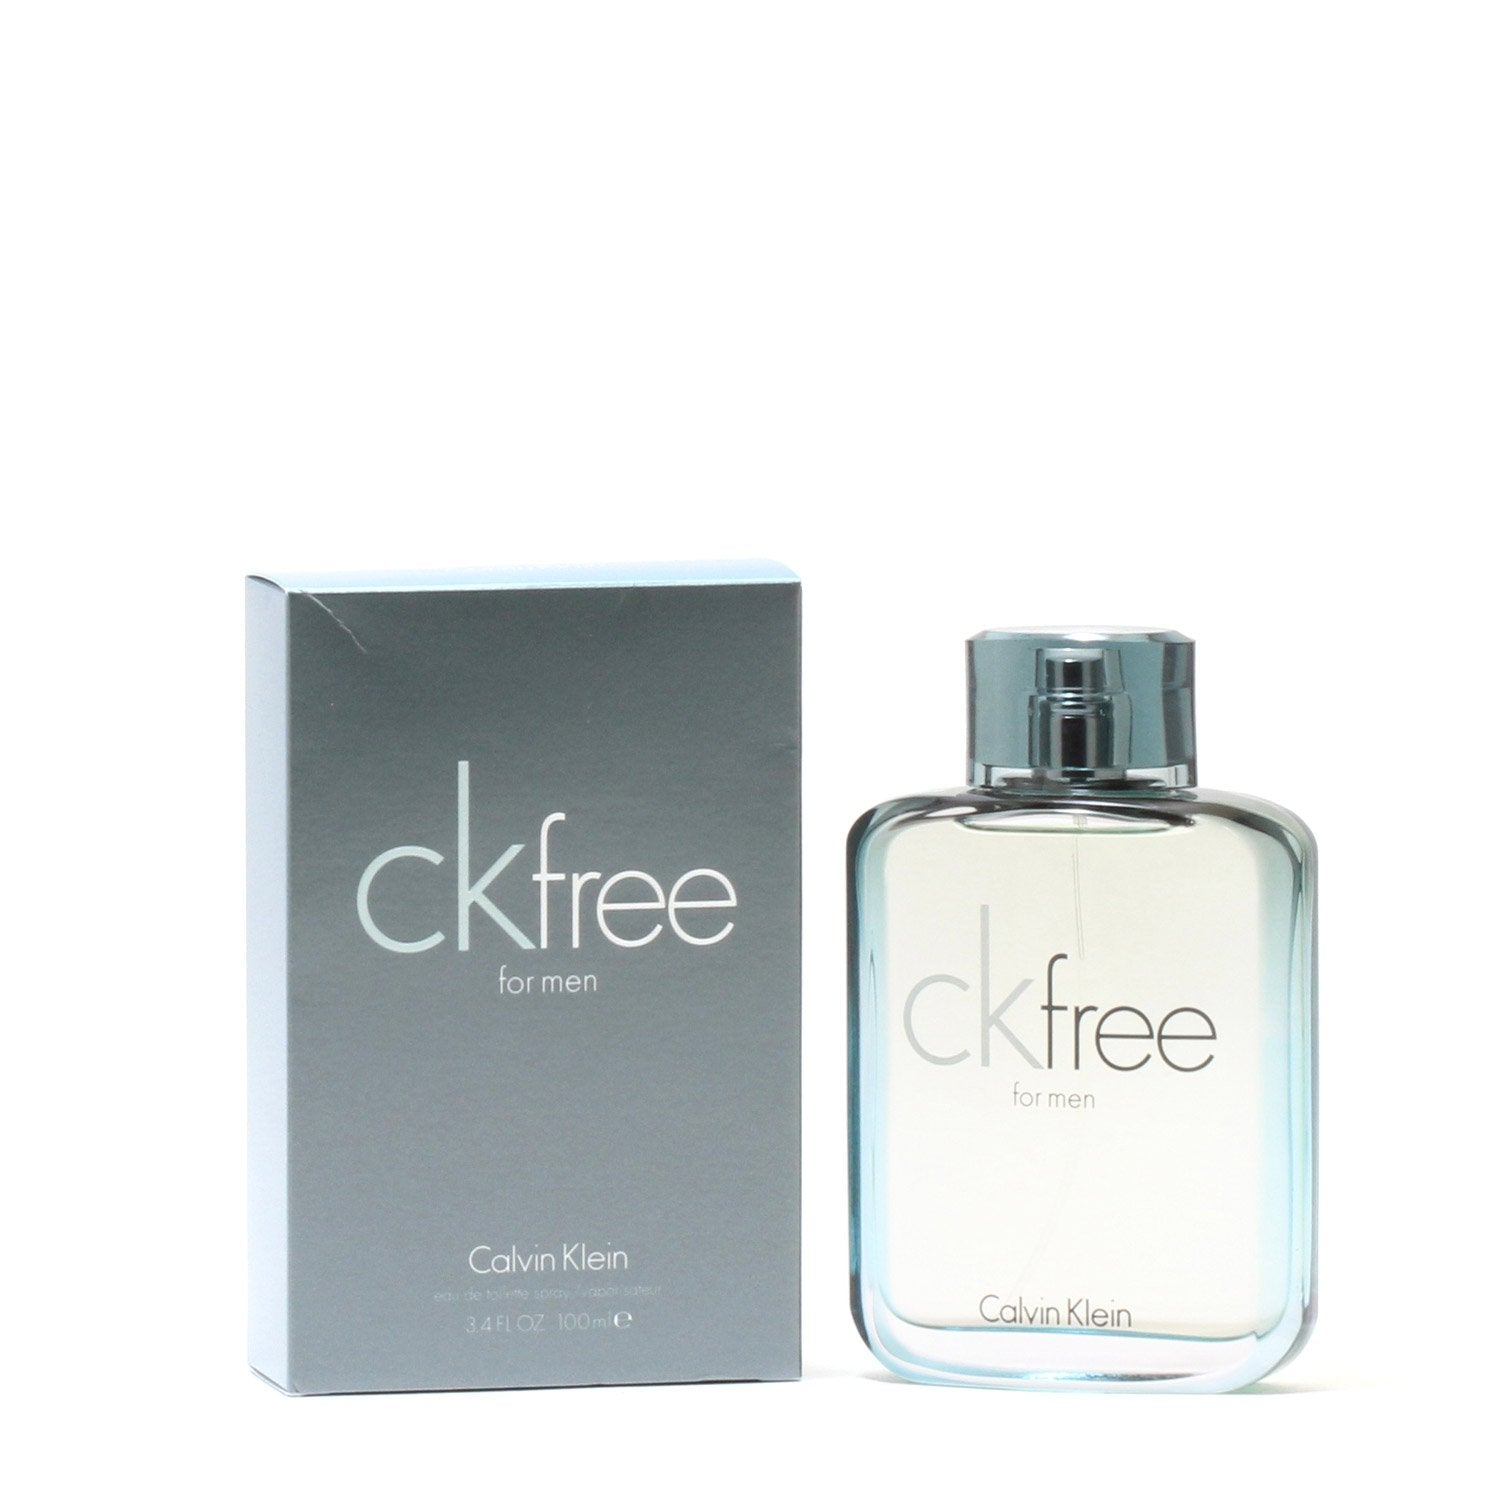 CK FREE FOR MEN BY CALVIN KLEIN - EAU DE TOILETTE SPRAY – Fragrance Room